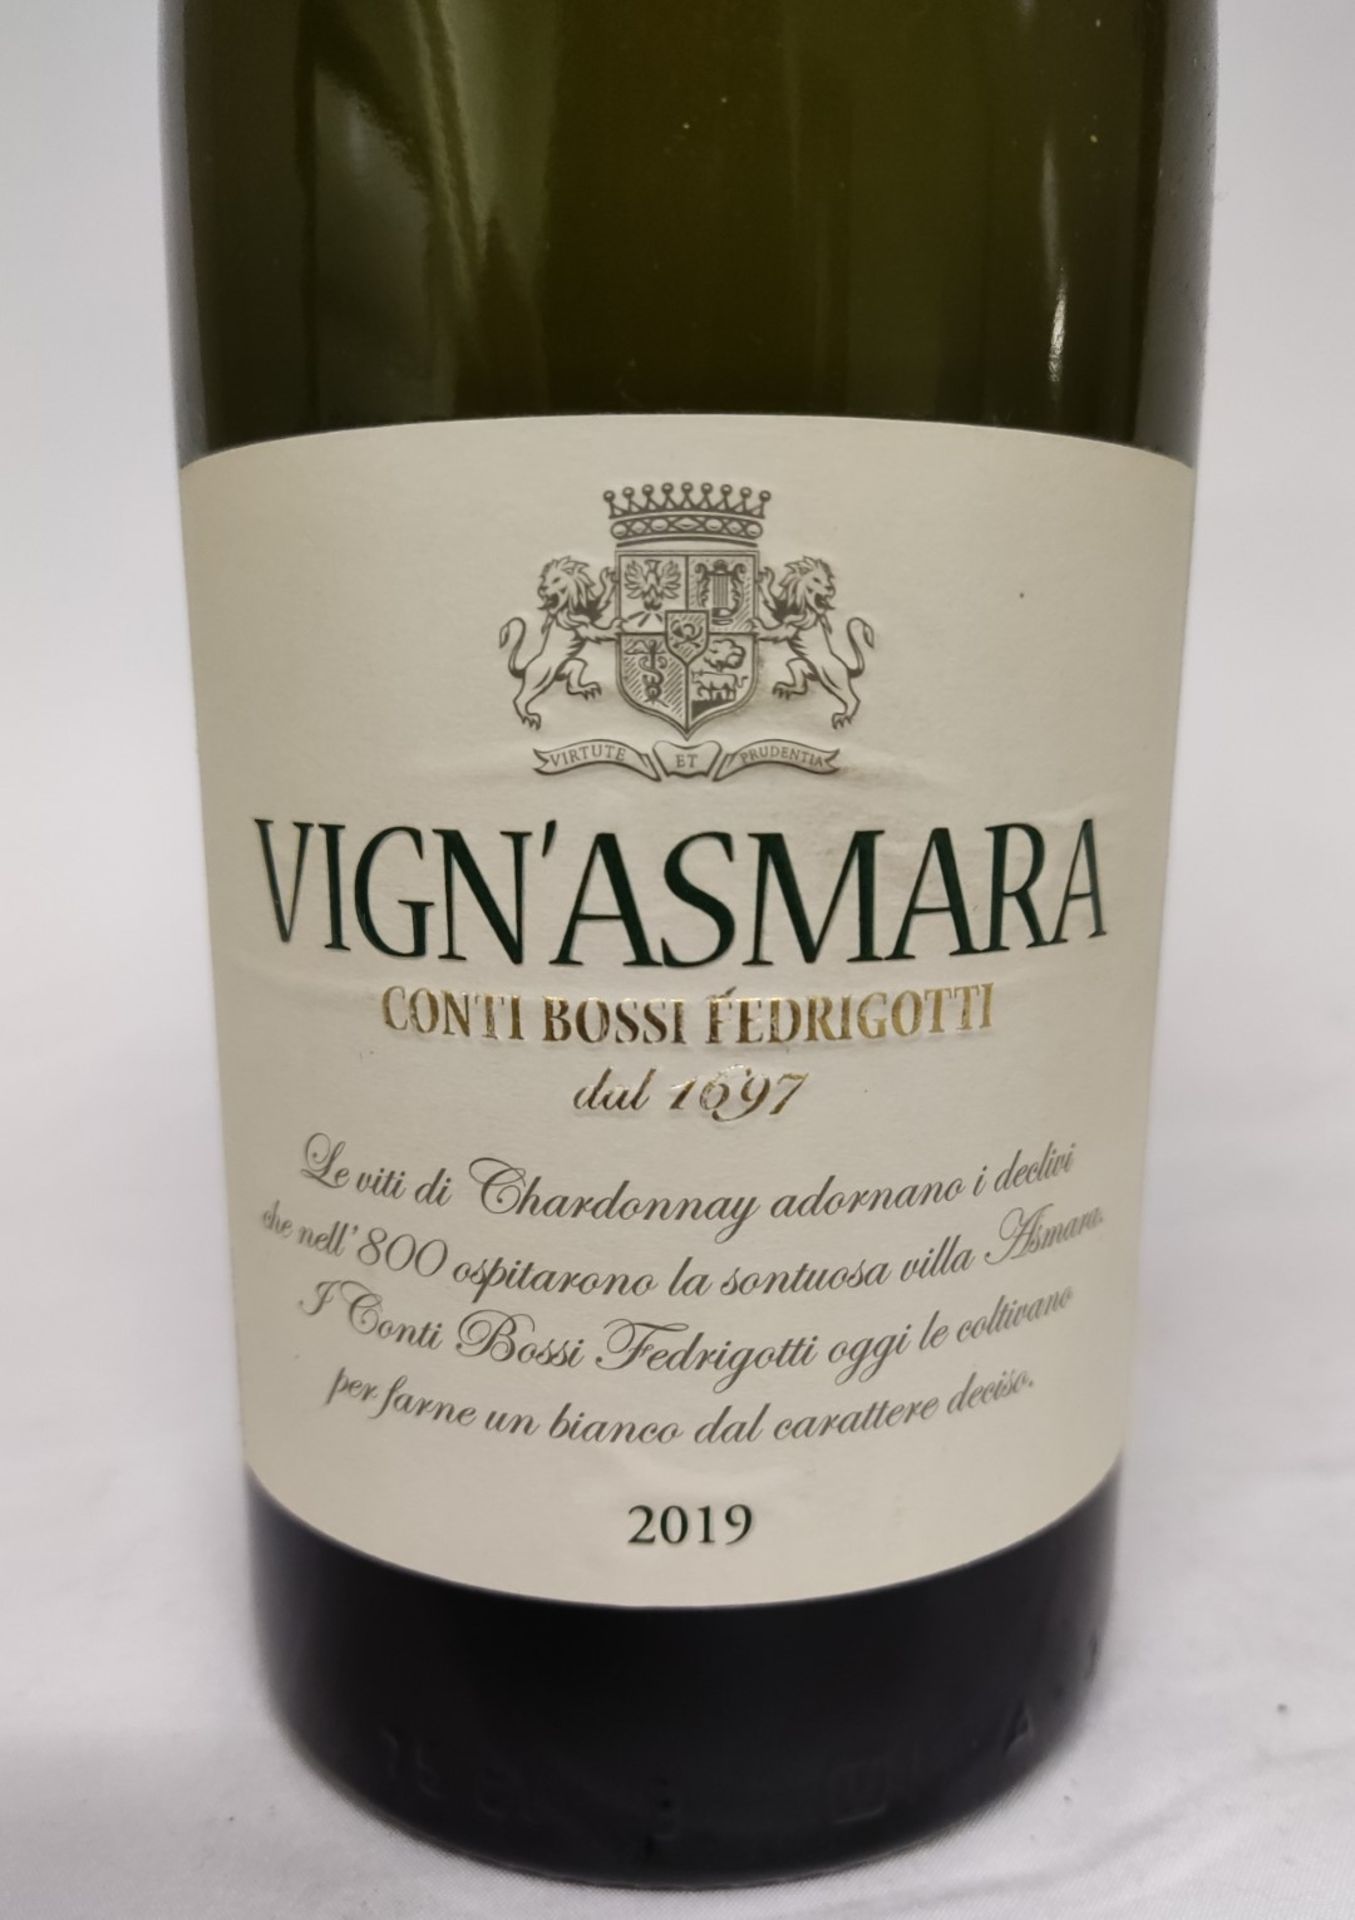 1 x Bottle of 2019 Masi Conti Bossi Fedrigotti Vign'Asmara Vigneti Delle Dolomiti Igt - Image 3 of 5